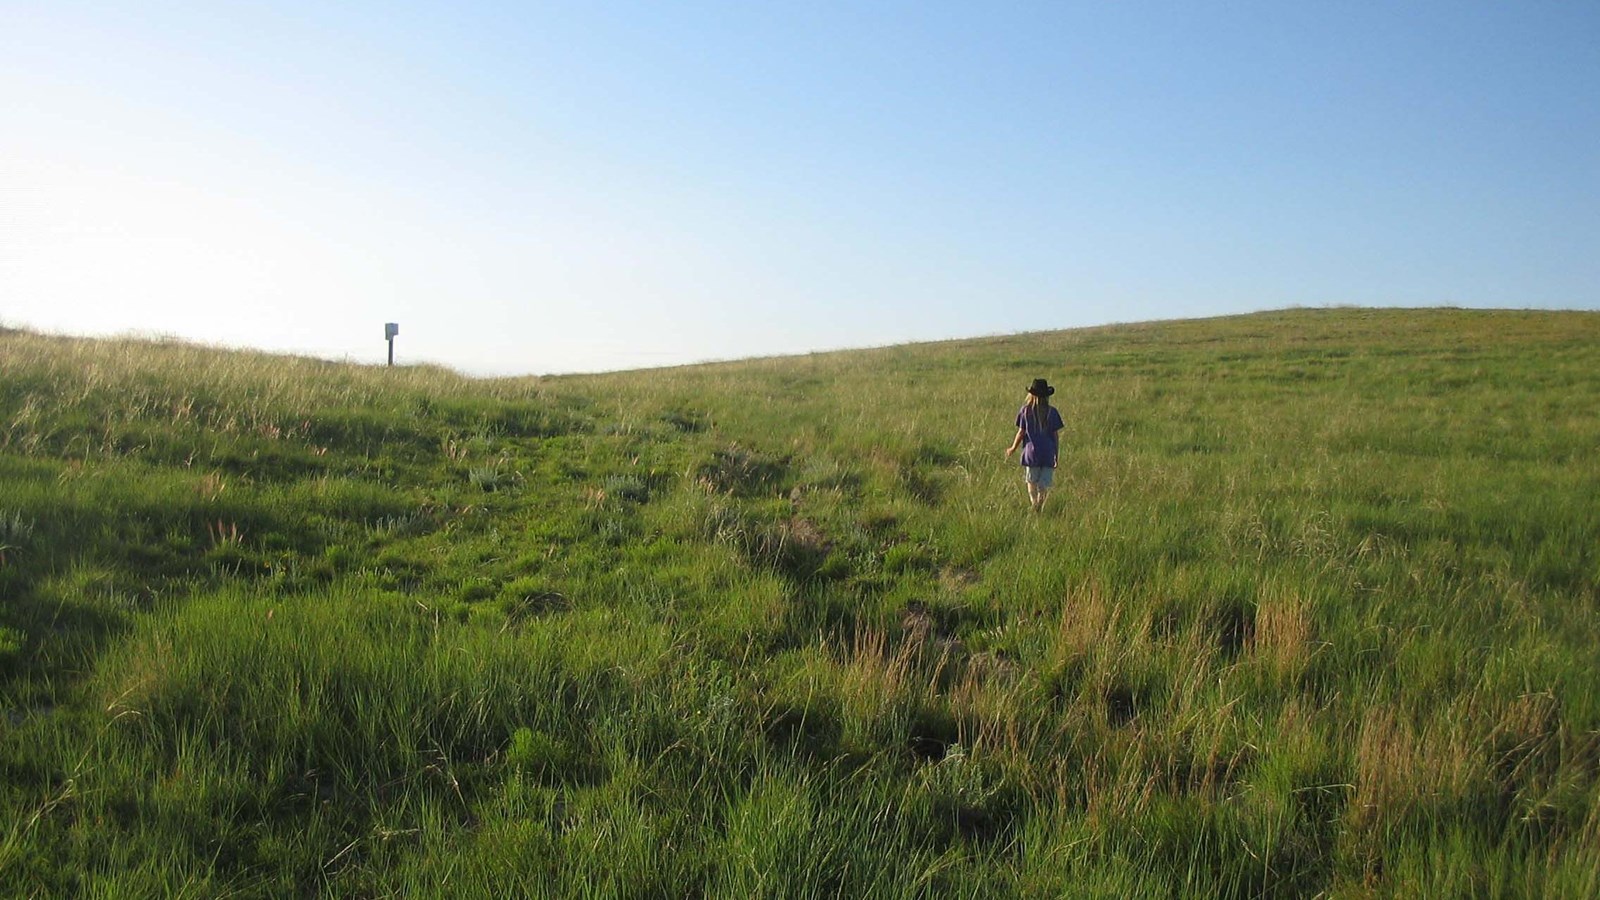 A rut leads up through a grassy hill.